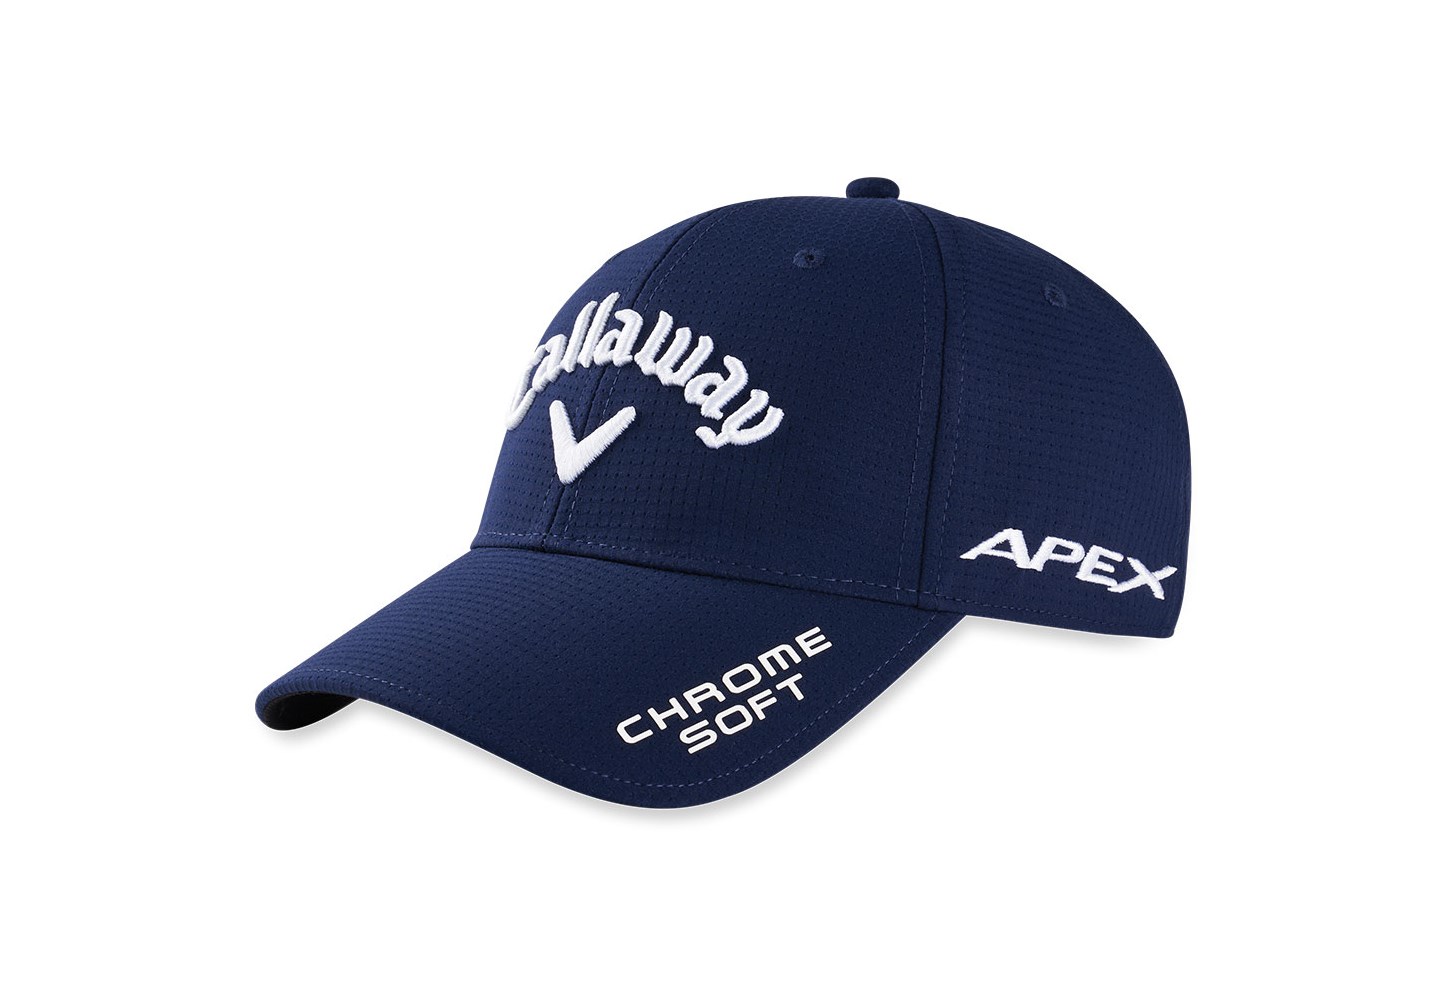 Callaway Tour Authentic Pro Cap - Apex and Mavrik Logos - Golfonline